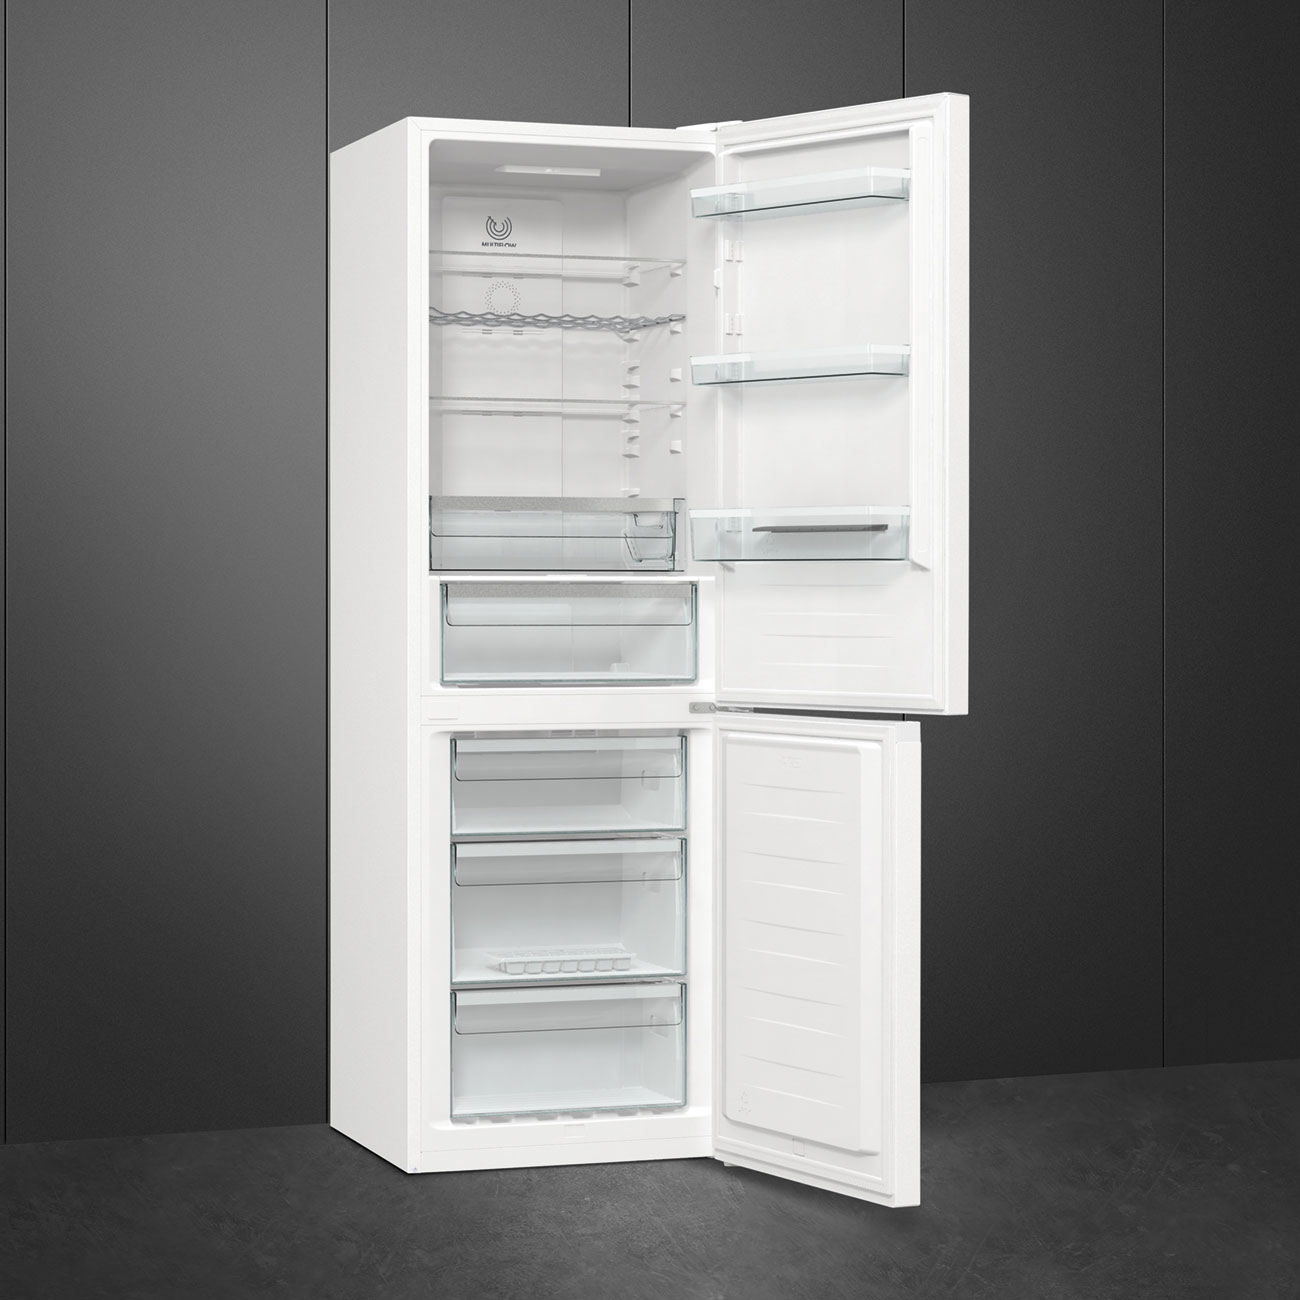 Bottom Mount Free standing refrigerator - Smeg_4